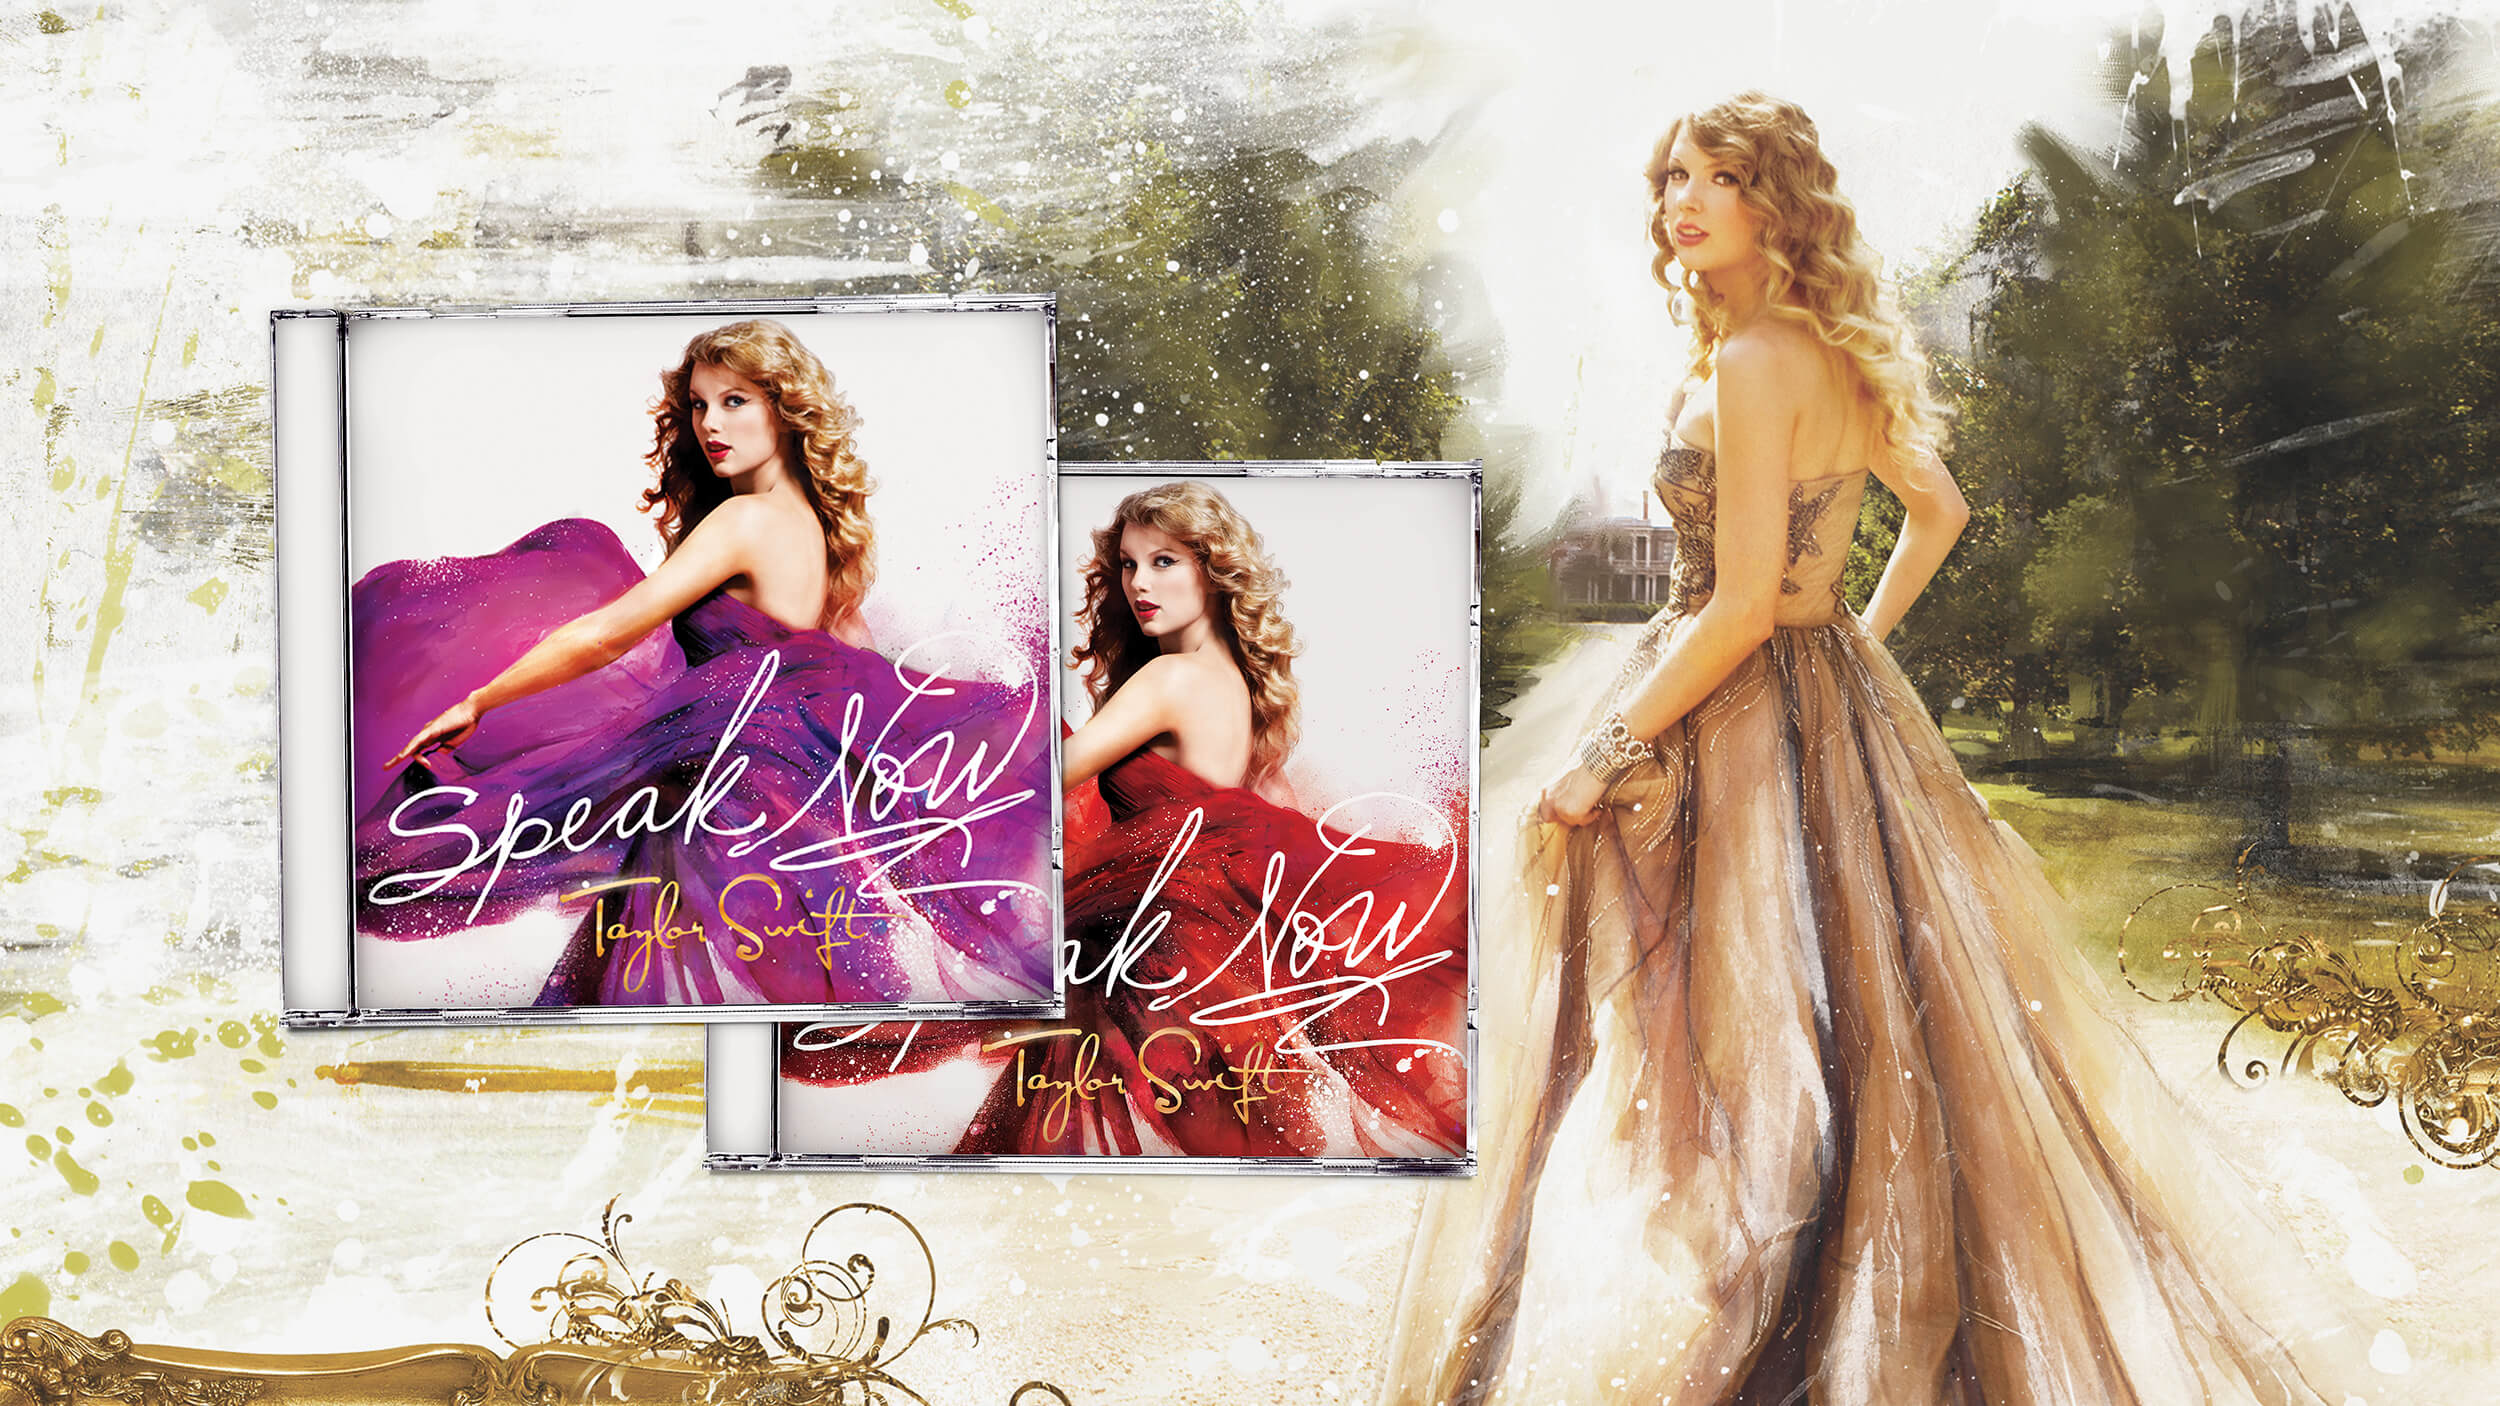 Album cover design and case mock up of Taylor Swift Speak Now album